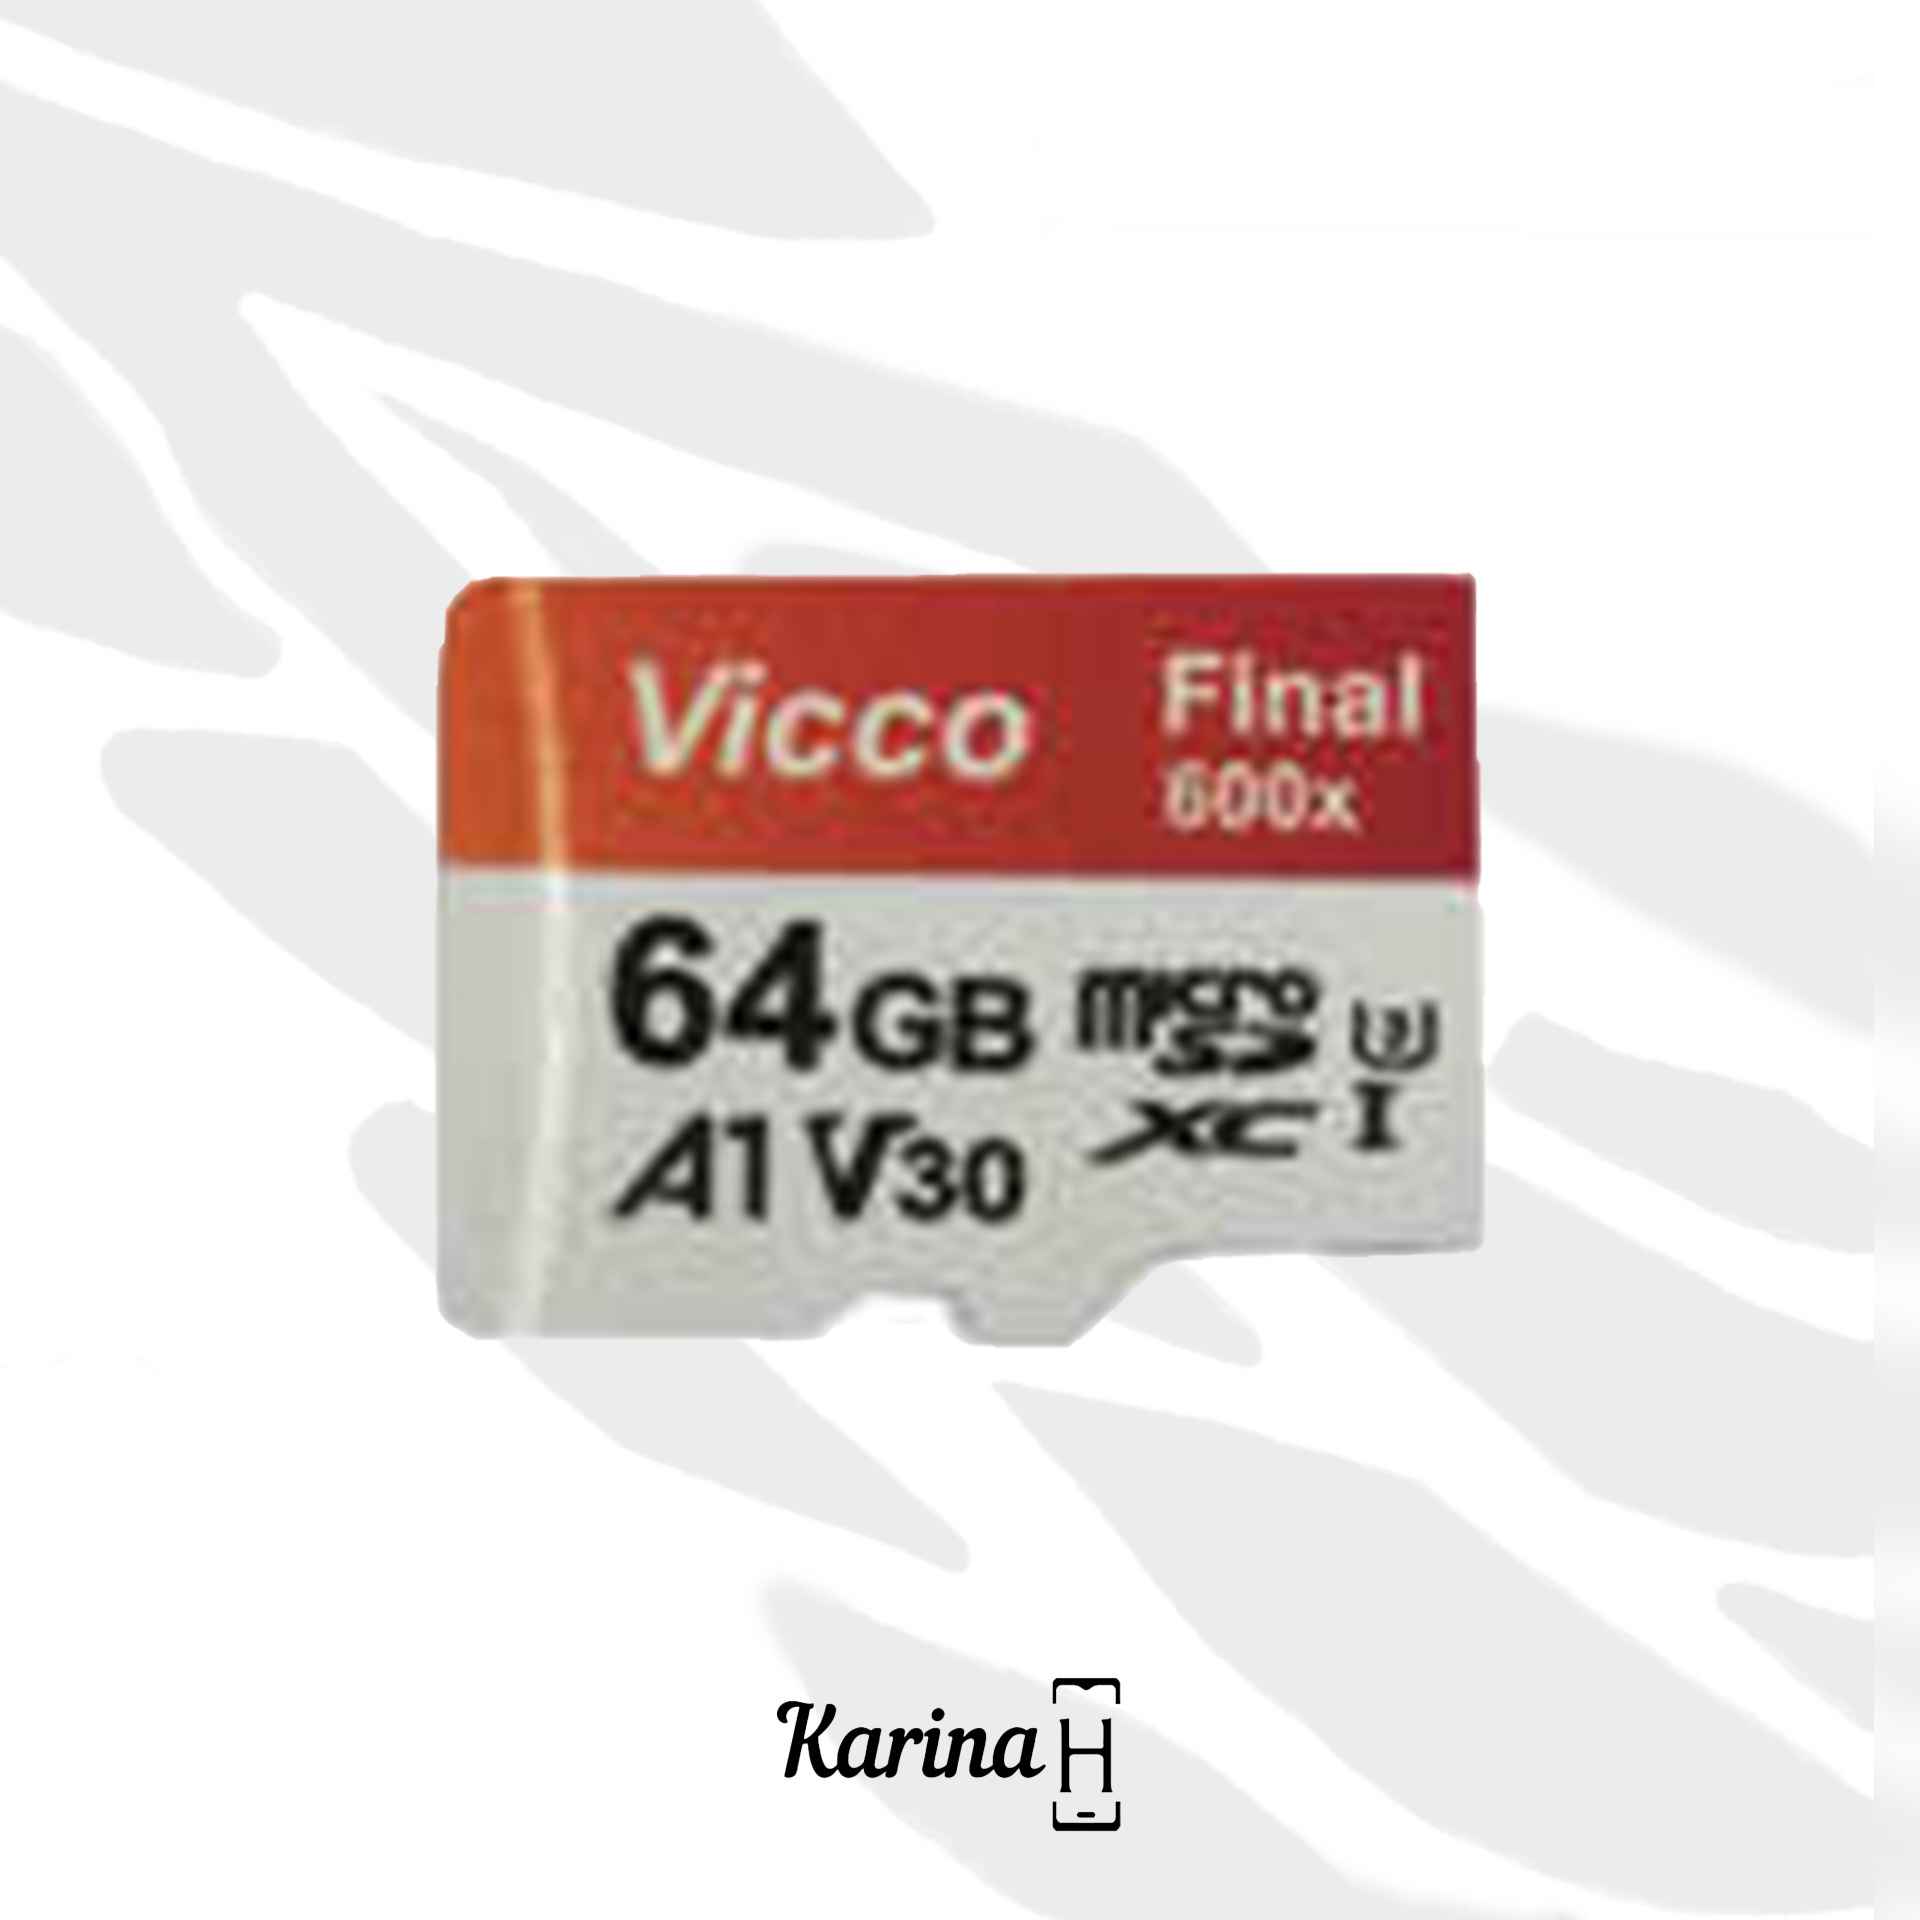 کارت حافظه microSDXC ویکومن مدل Final 600X کلاس 10 ظرفیت 64 گیگابایت